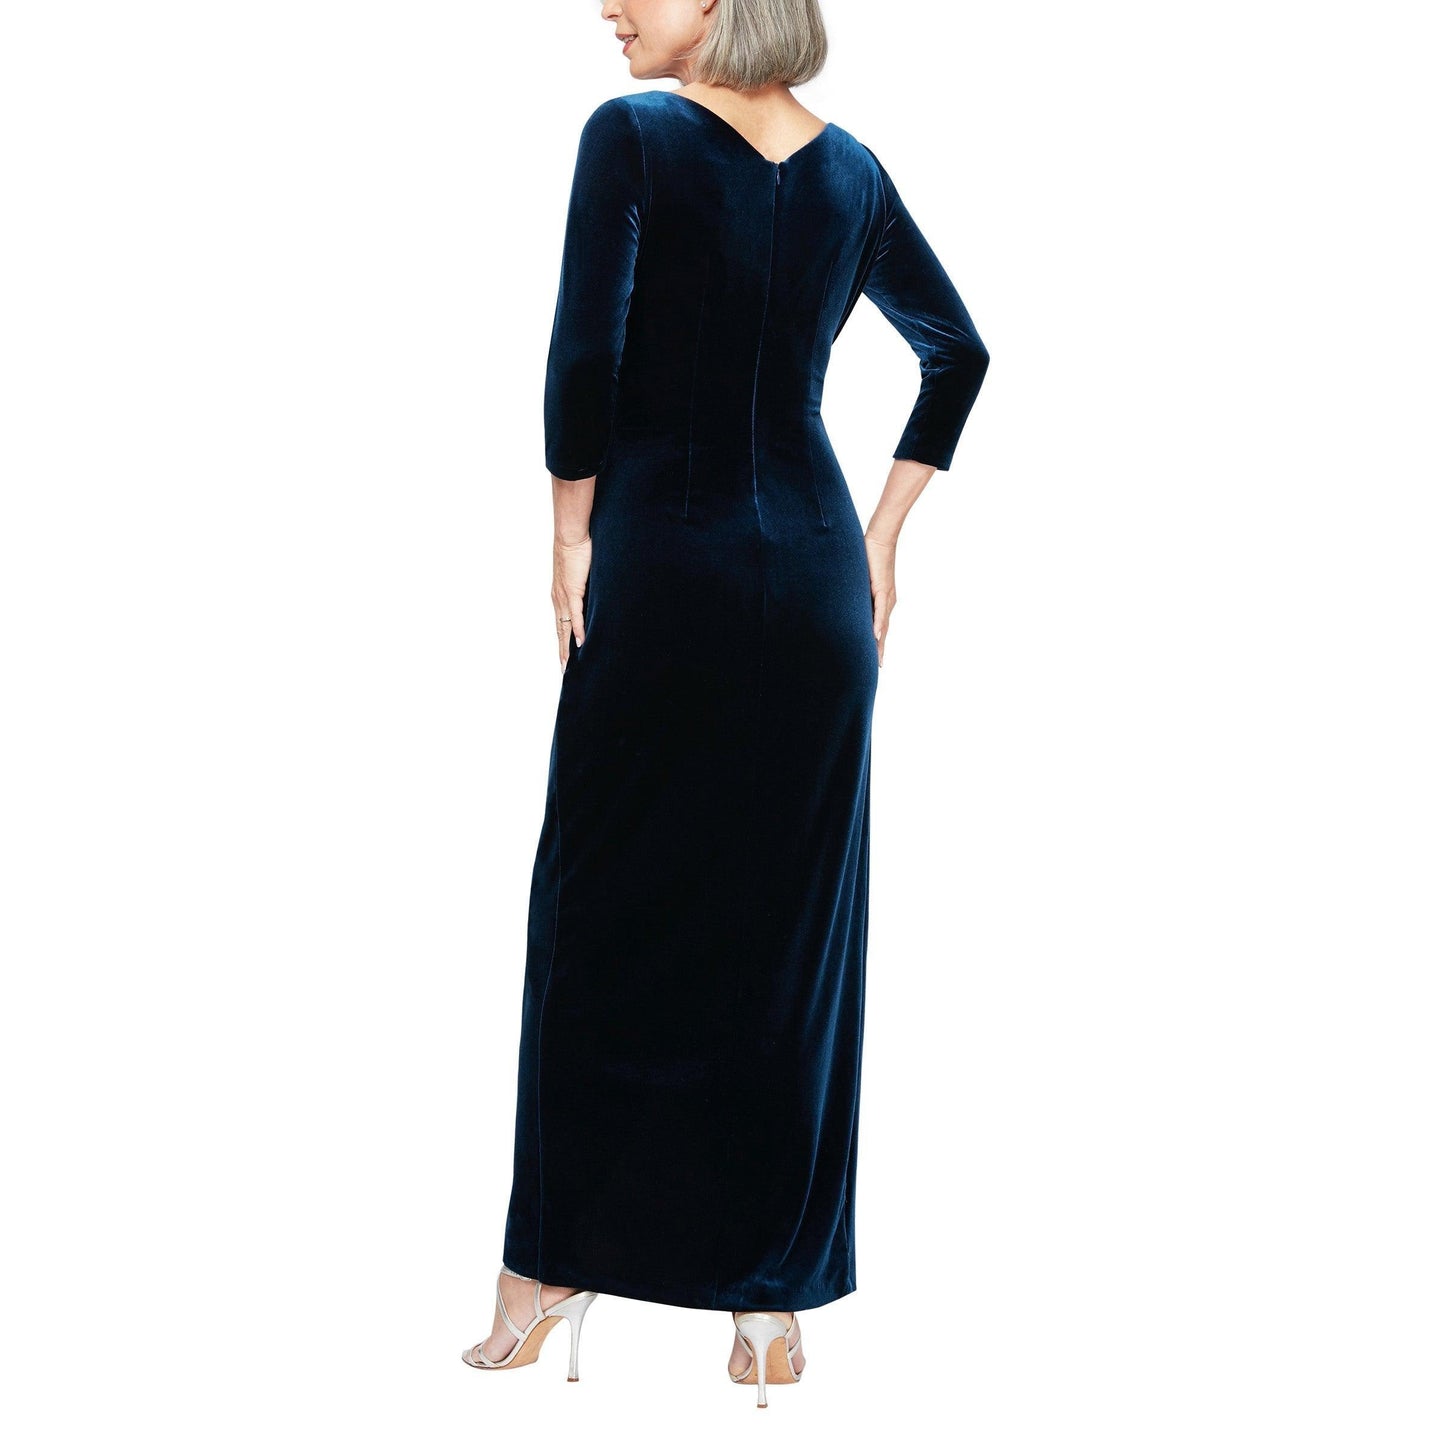 Alex Evenings Long Formal Velvet Dress 81918583 - The Dress Outlet